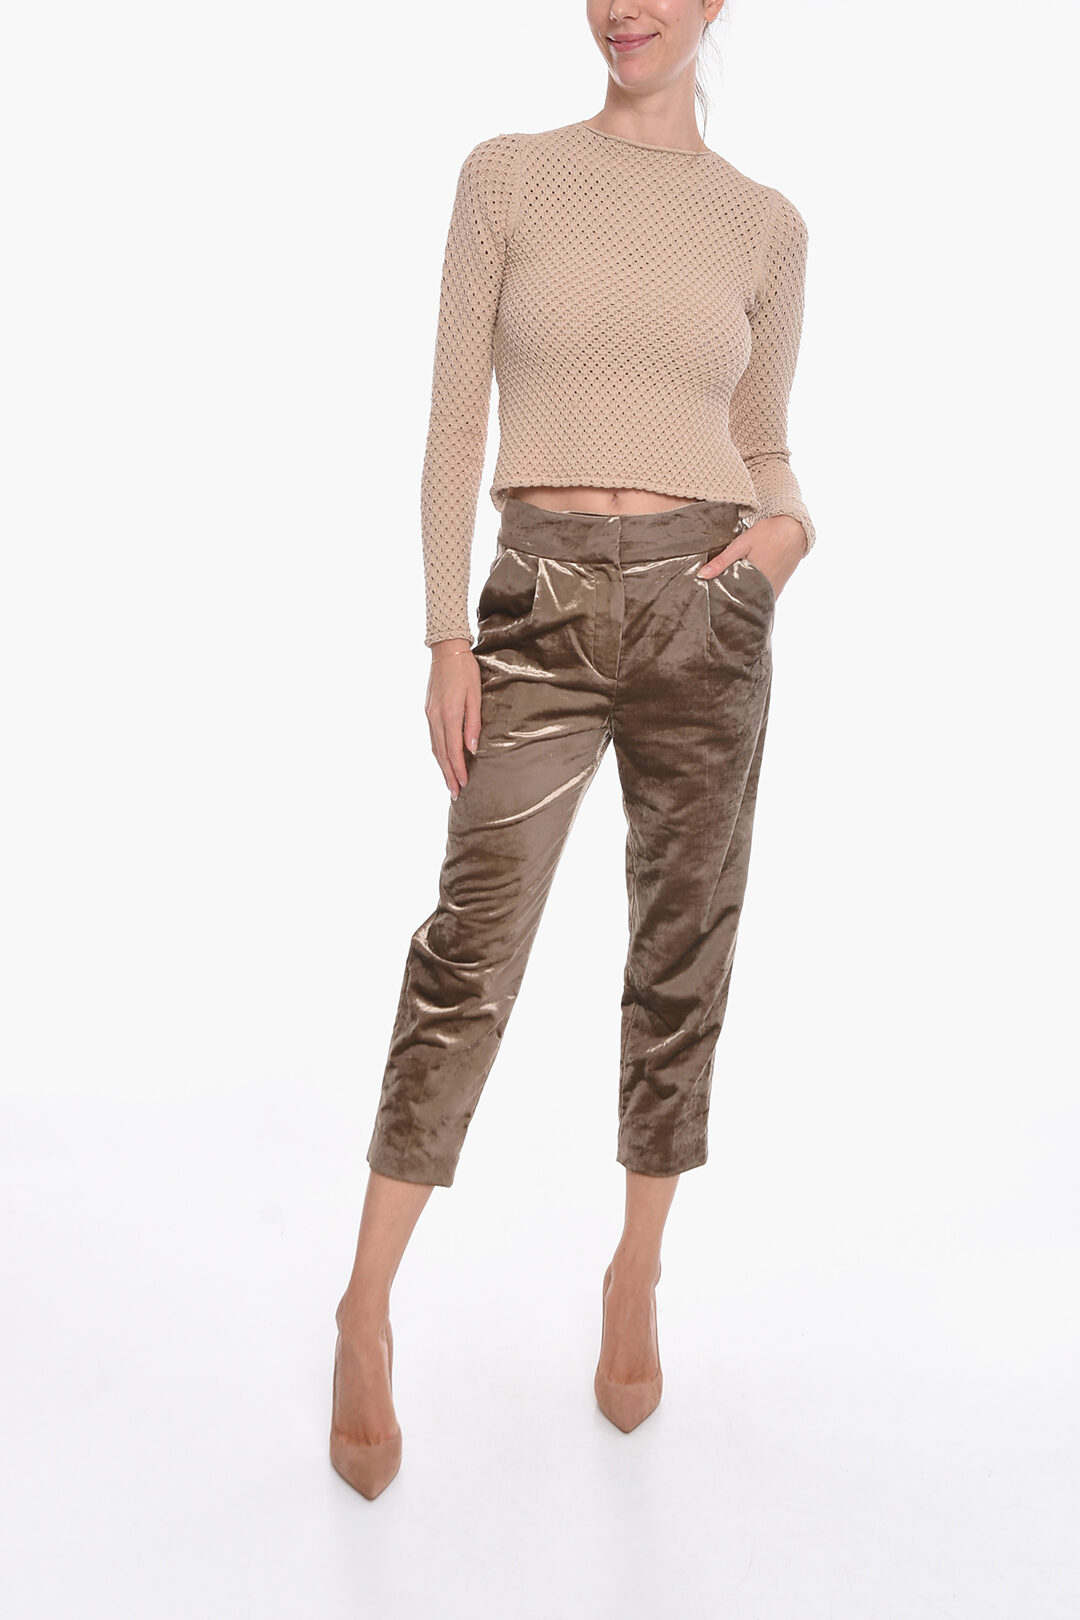 SHEIN Thick Strap Velvet Crop Top & Palazzo Pants Co-Ord | Velvet clothes,  Velvet top designs, Fashion sketches dresses